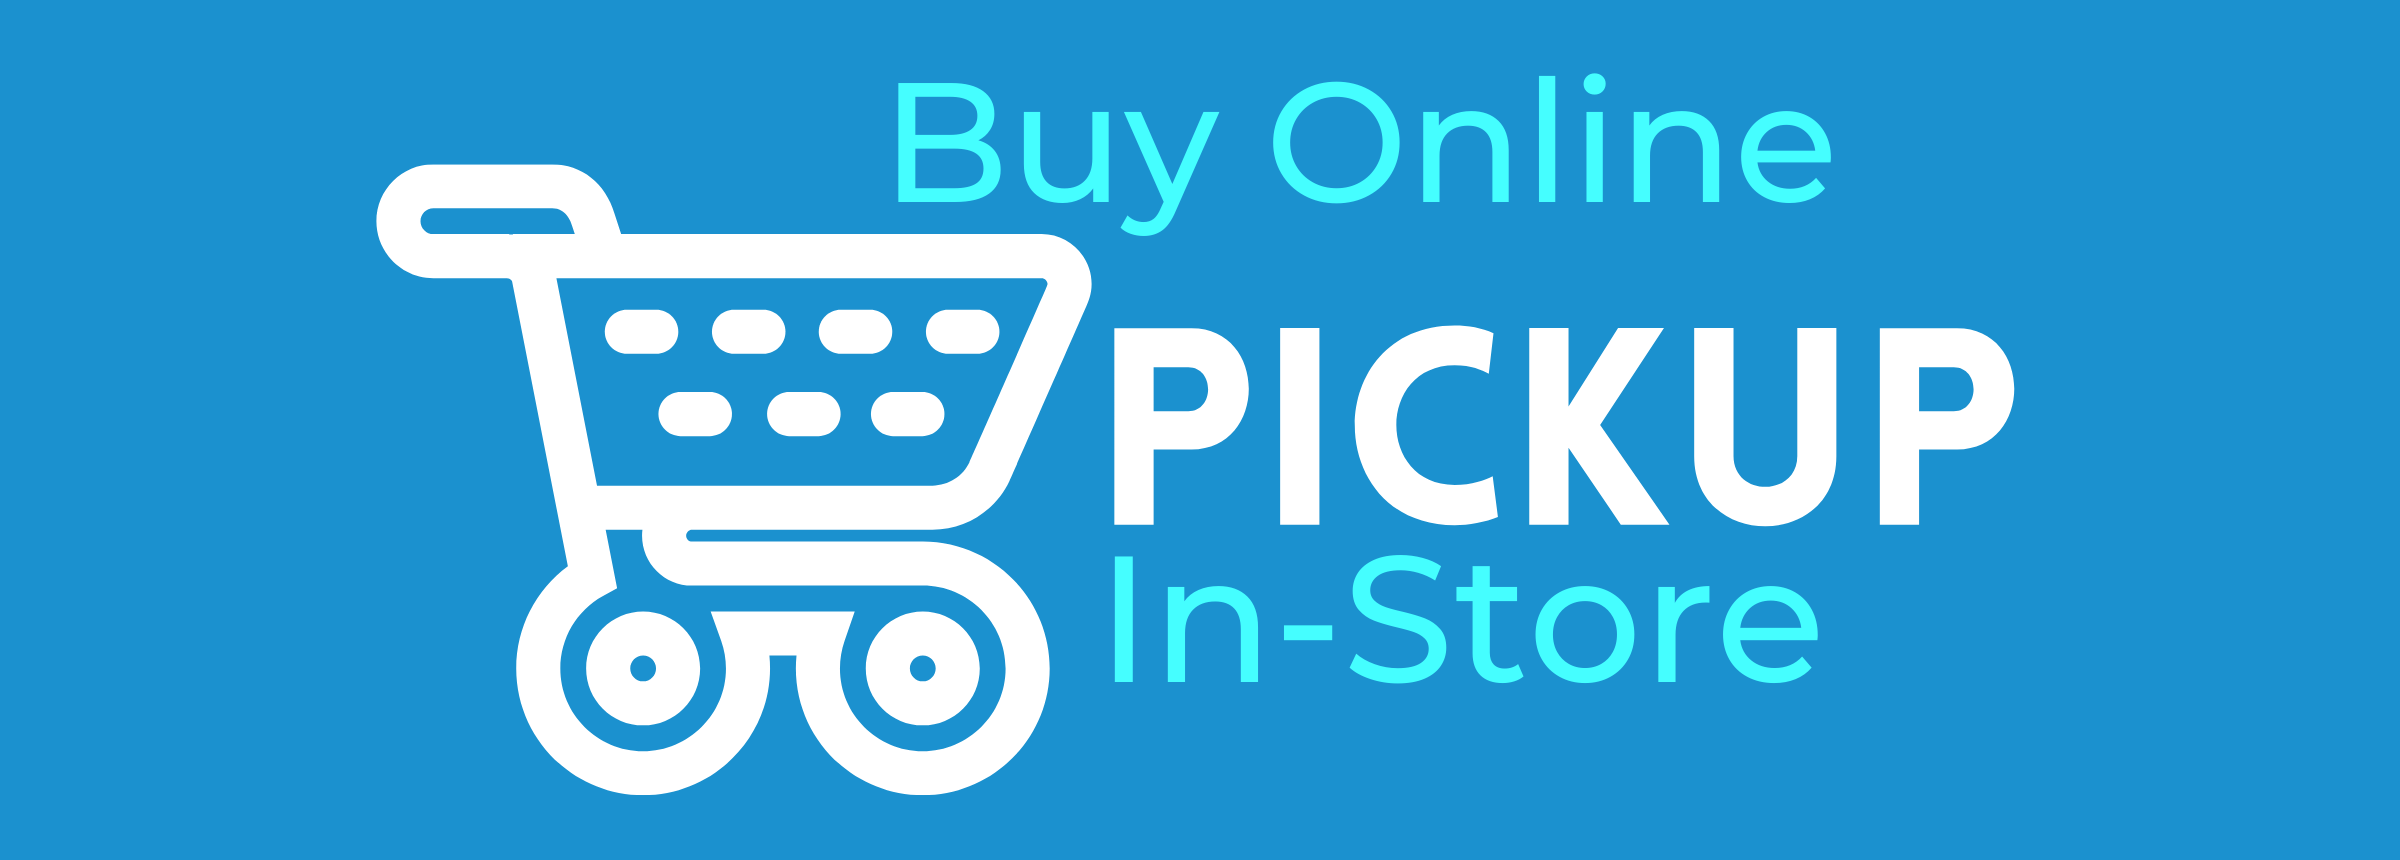 hollister buy online pickup in store